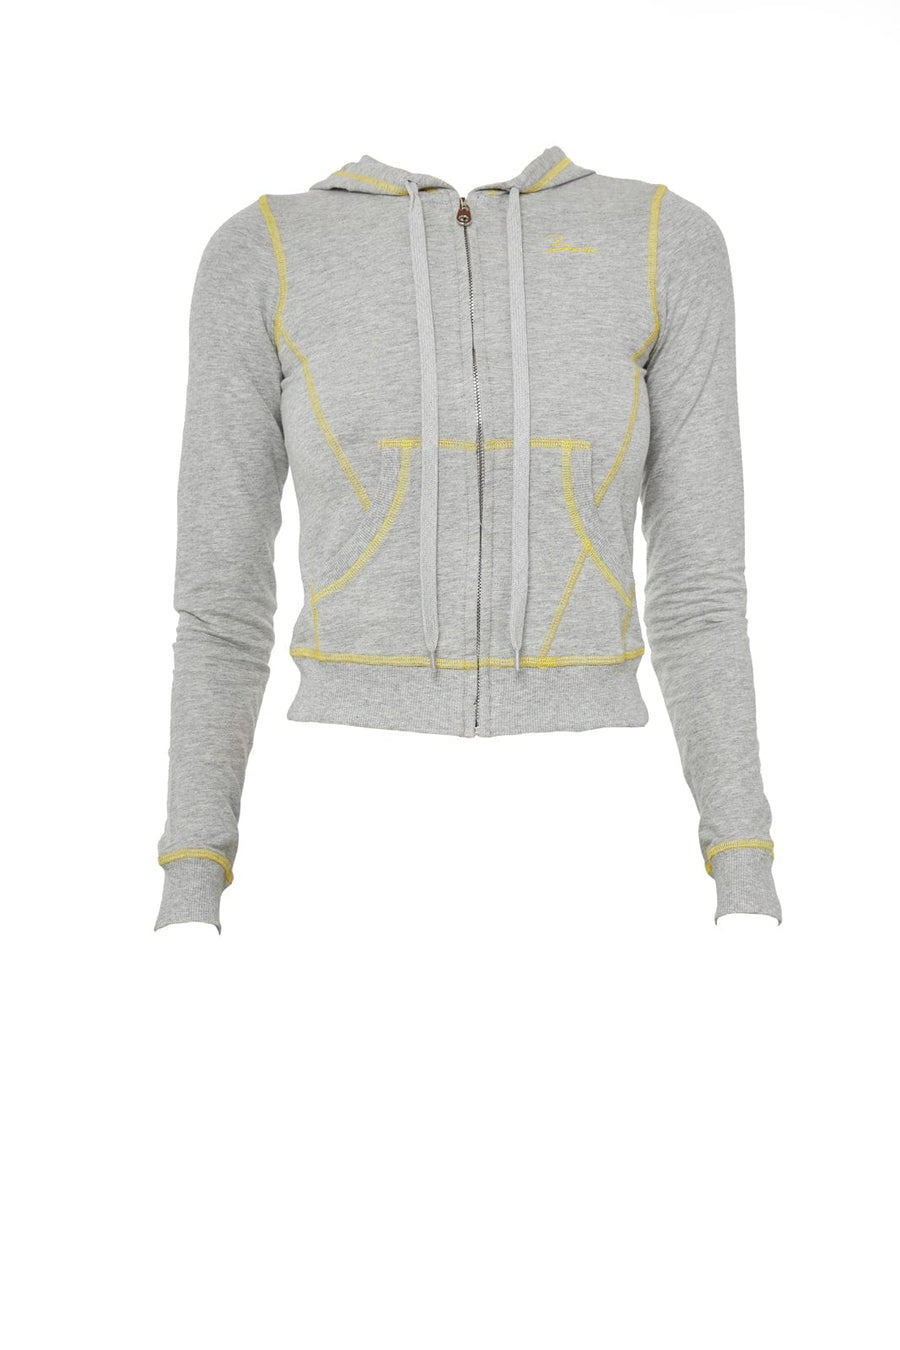 ESPRITE jacket- grey/ lemon  -  CLOTHING  -  B Ā M B A S W I M